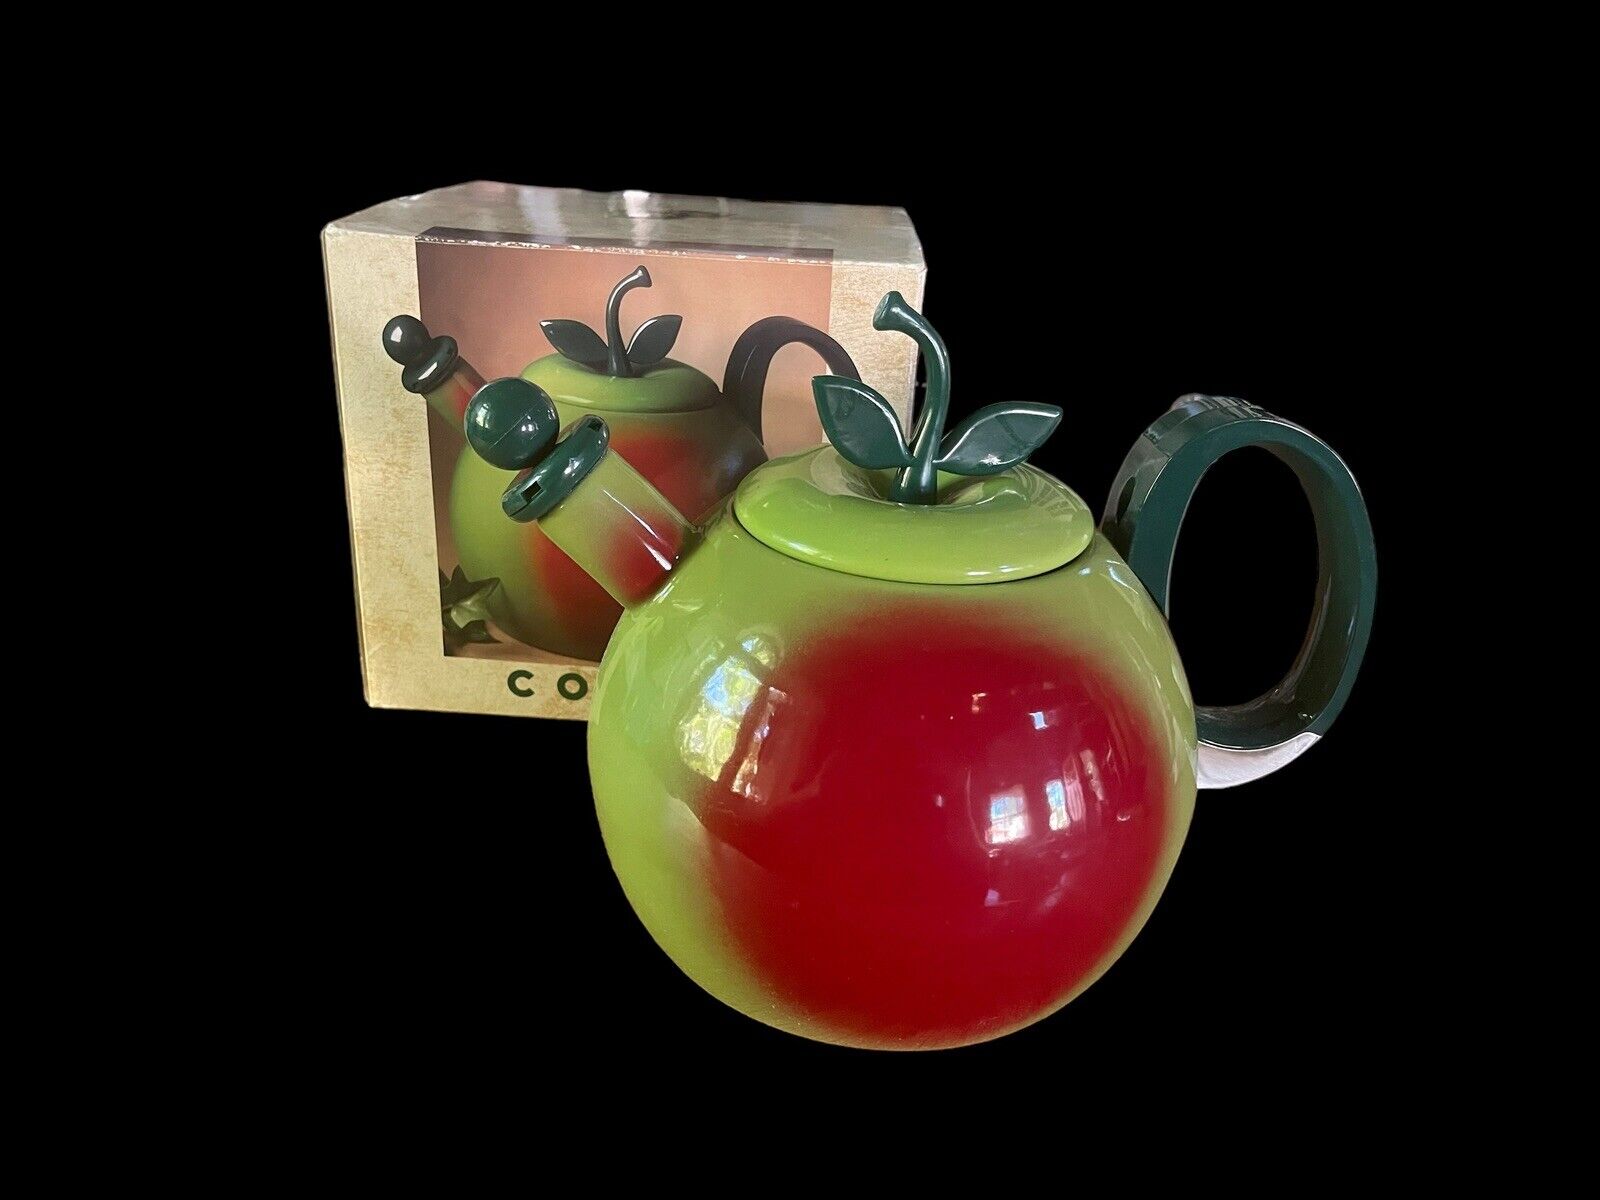 Rare NIB Vintage COPCO Enamel Crisp Green Red Apple Teapot Kettle 2.5 Quart